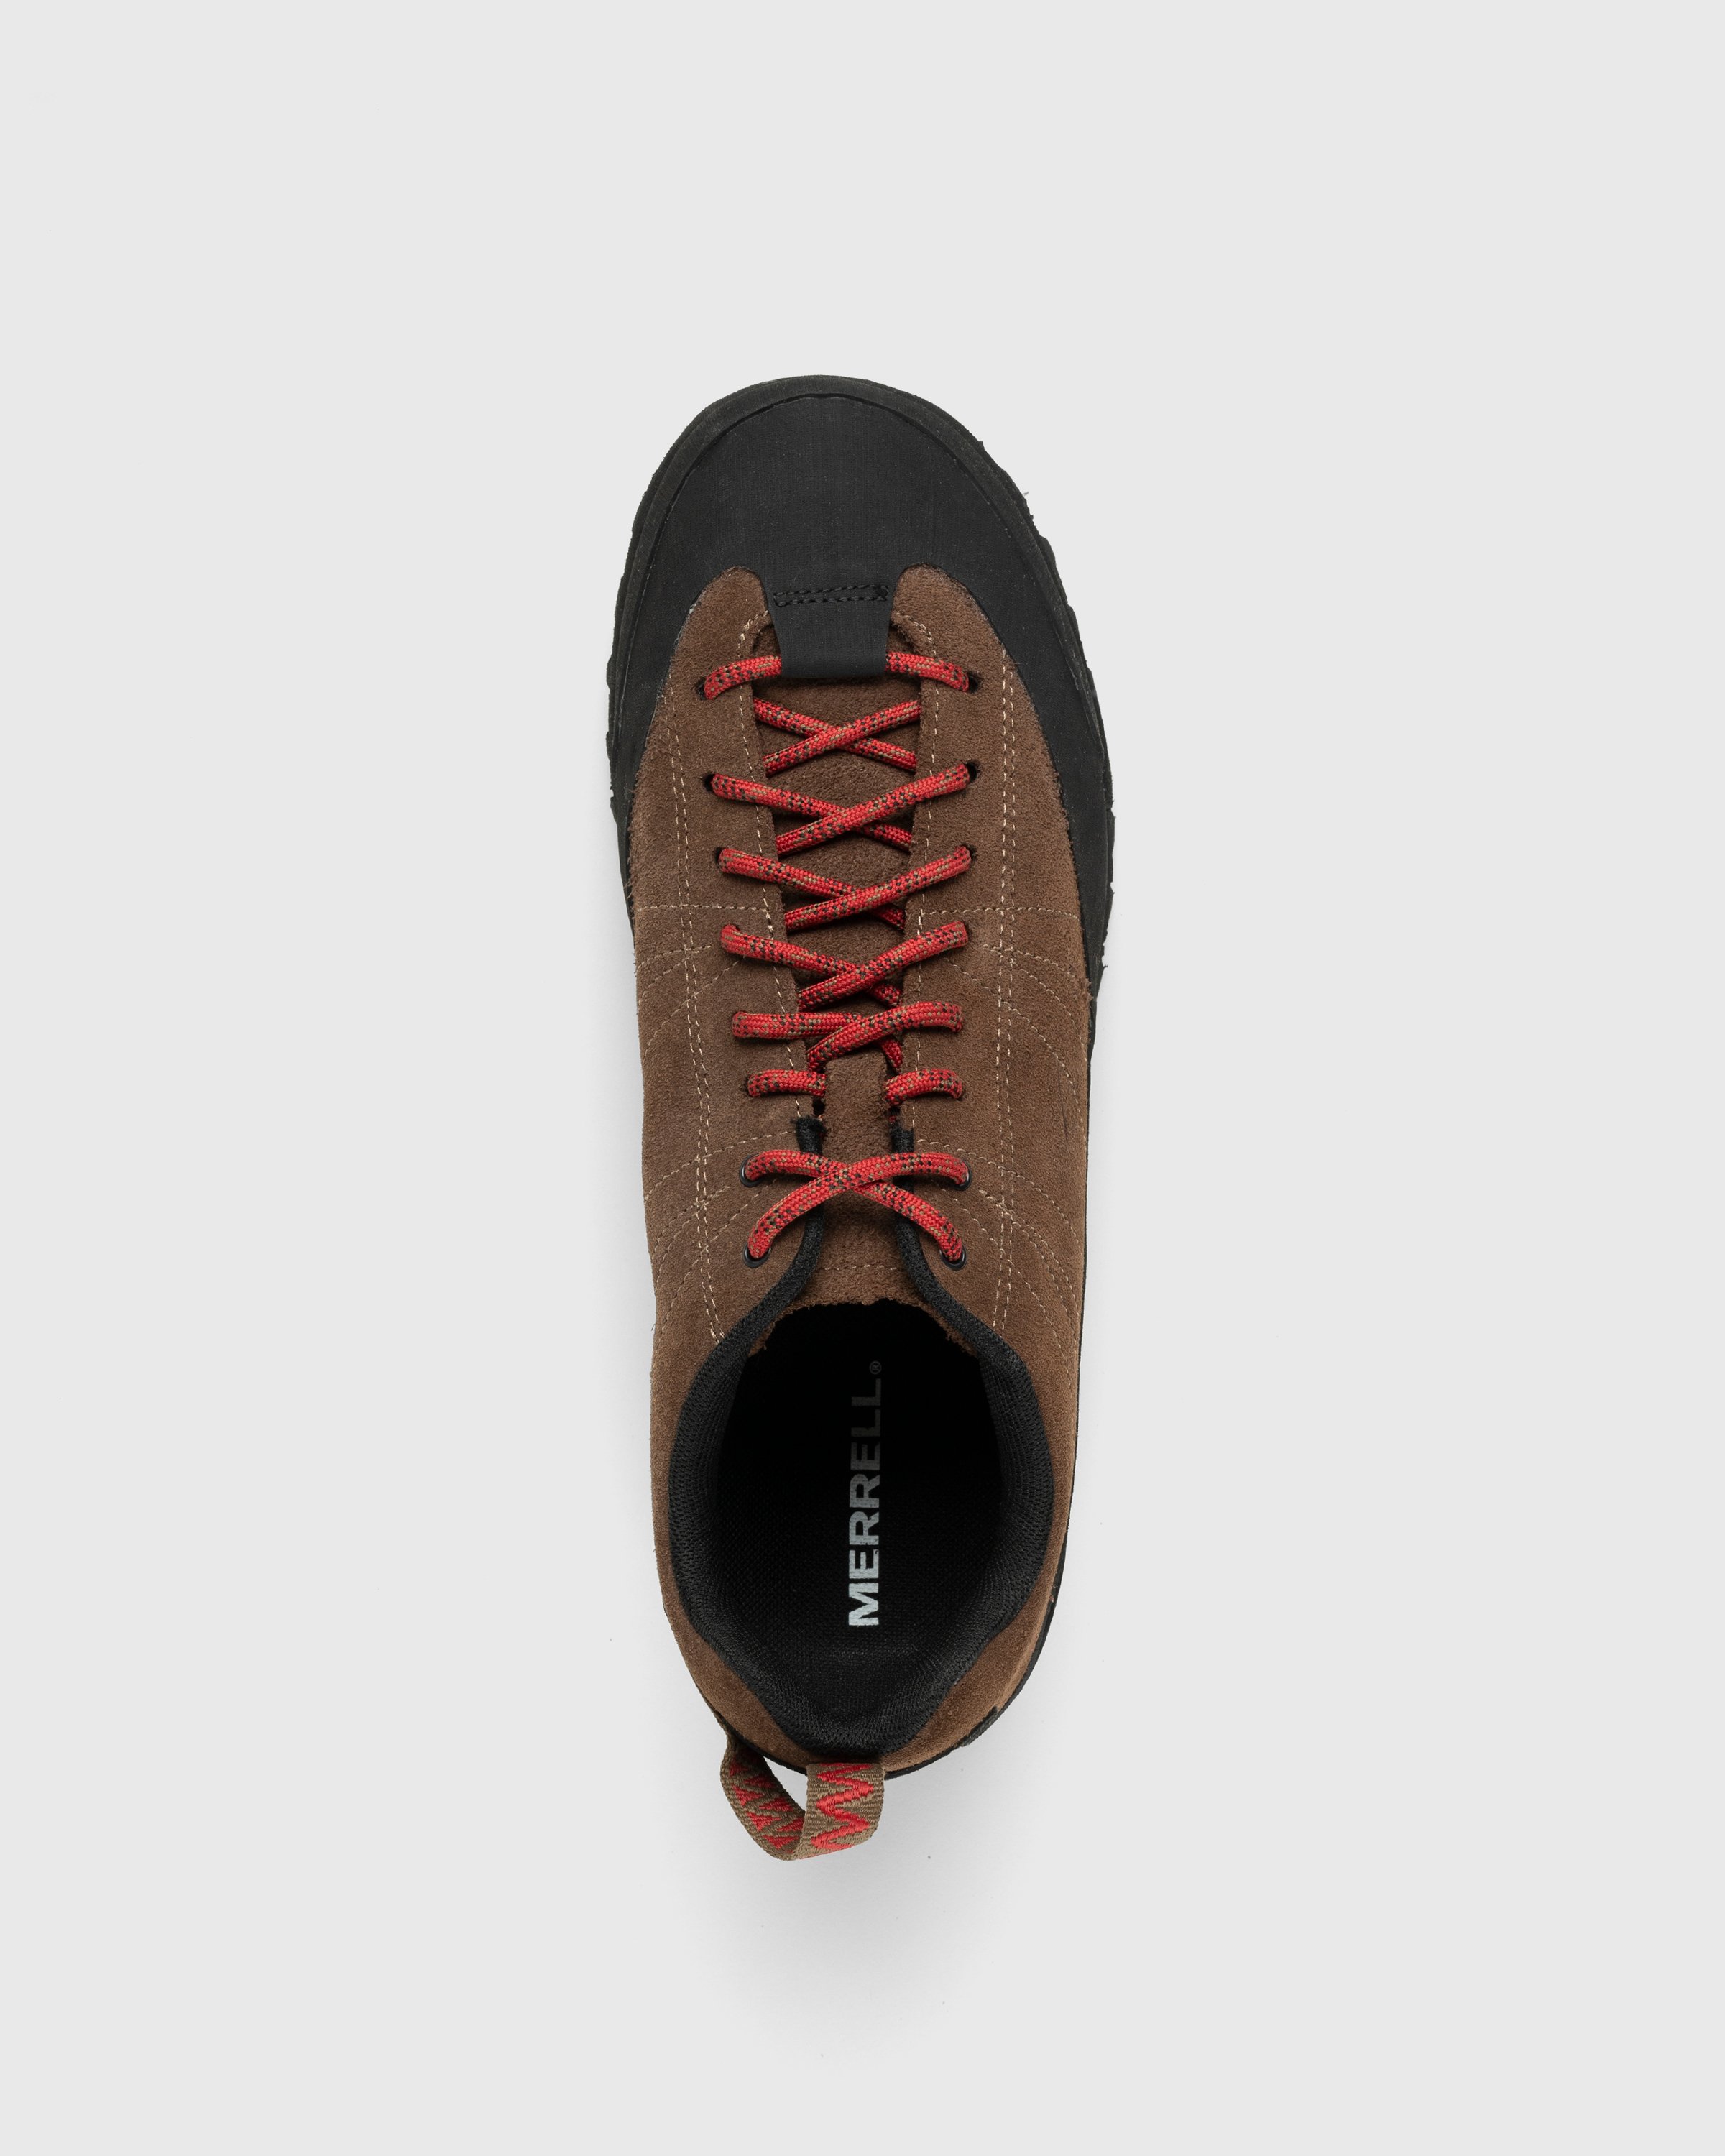 Merrell - Catalyst Pro Earth - Footwear - Brown - Image 5